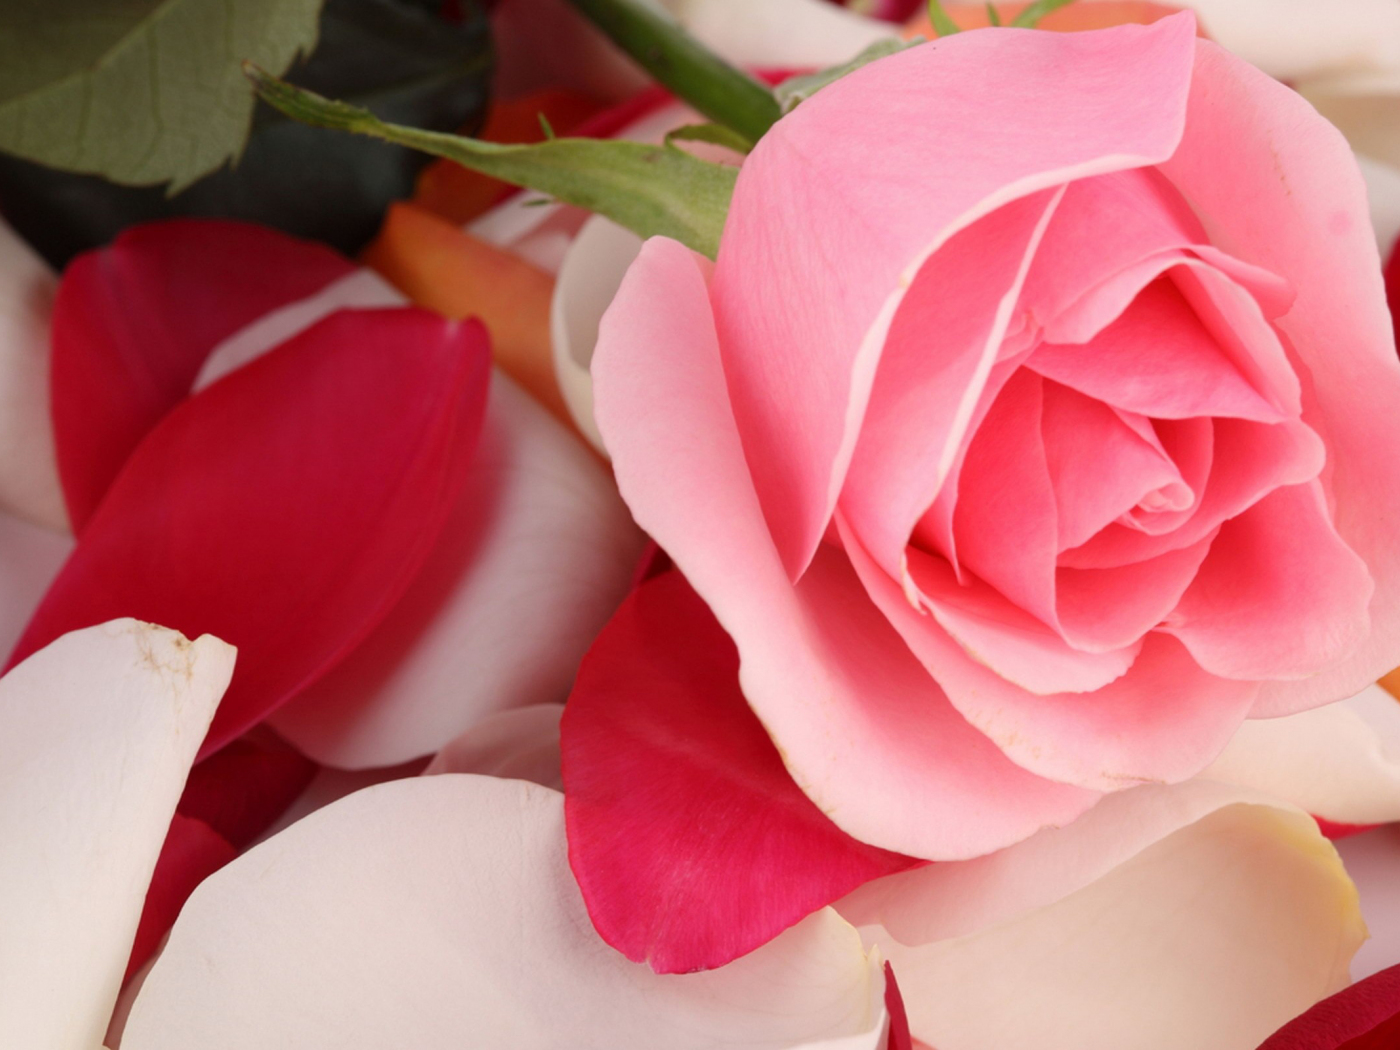 Download 1400x1050 Wallpaper Beautiful Pink Rose Flower, Standard 4:3,  Fullscreen, 1400x1050 Hd Image, Background, 4560